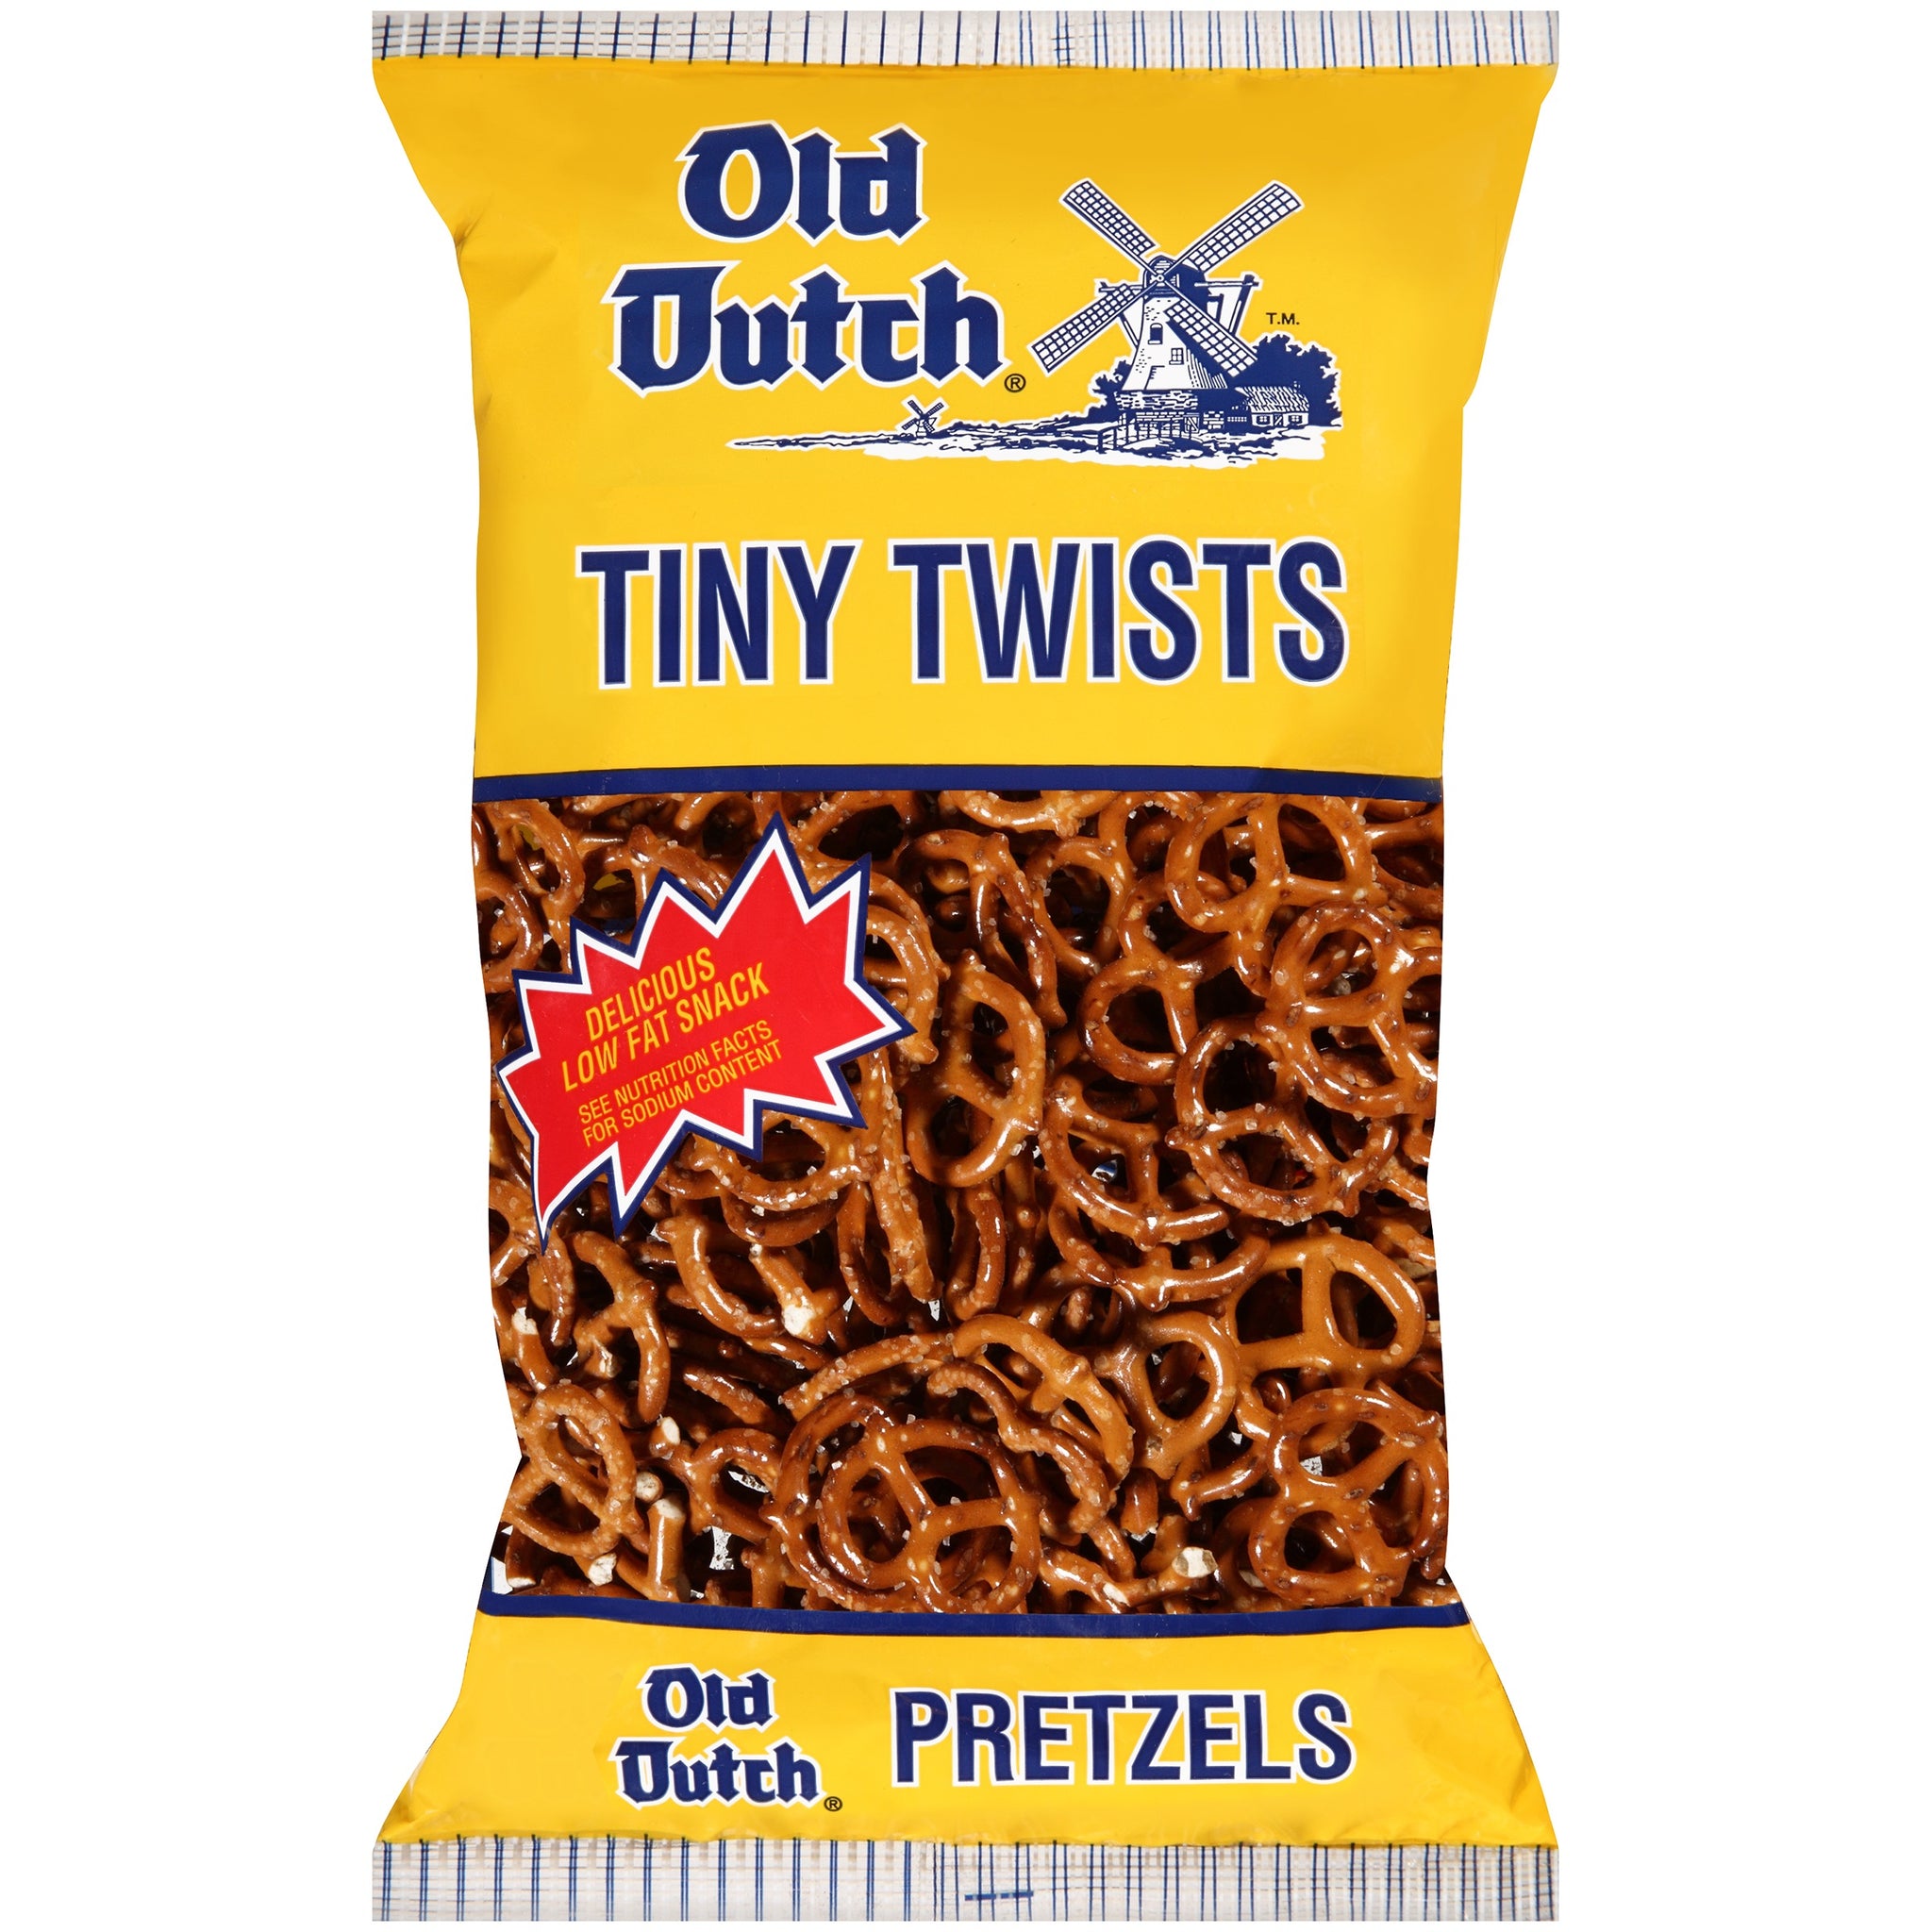 Old Dutch Tiny Twists Pretzels